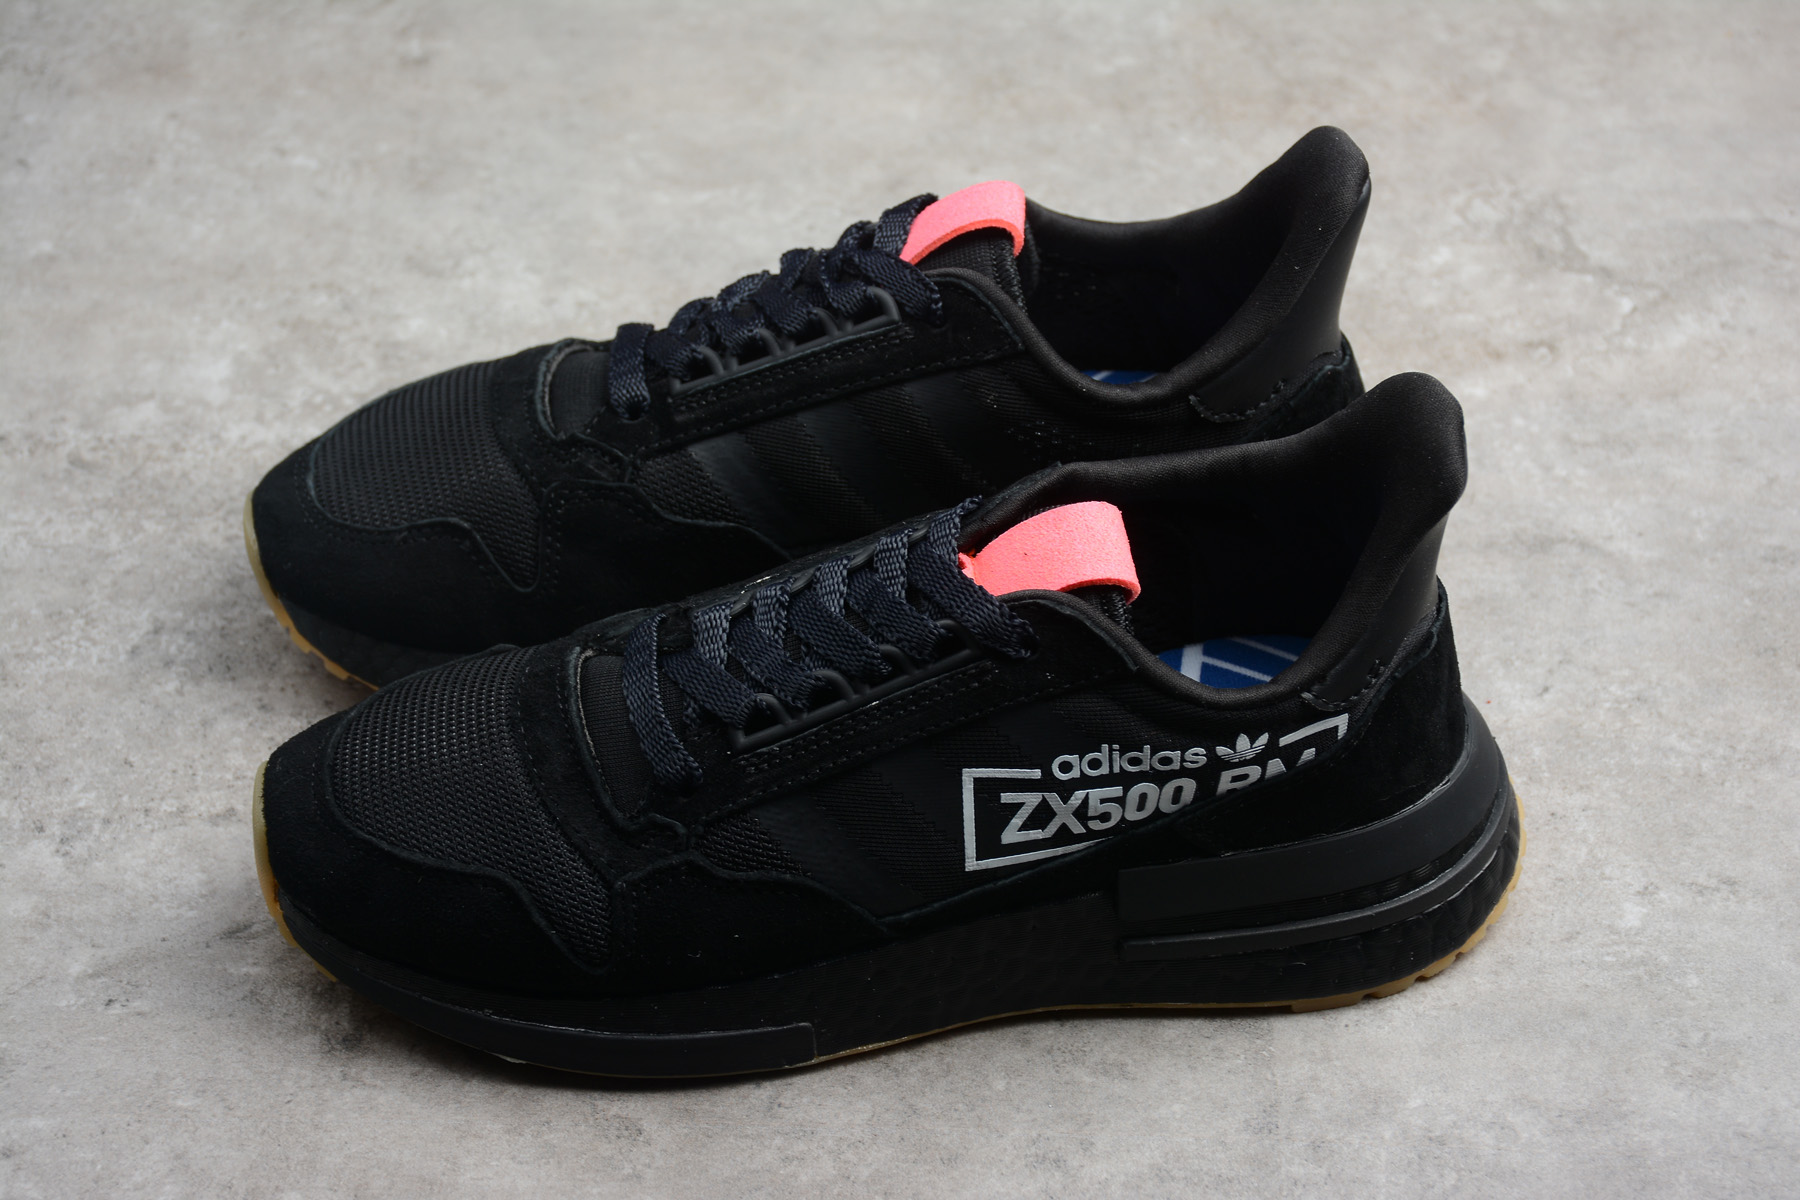 adidas zx 500 rm black pink